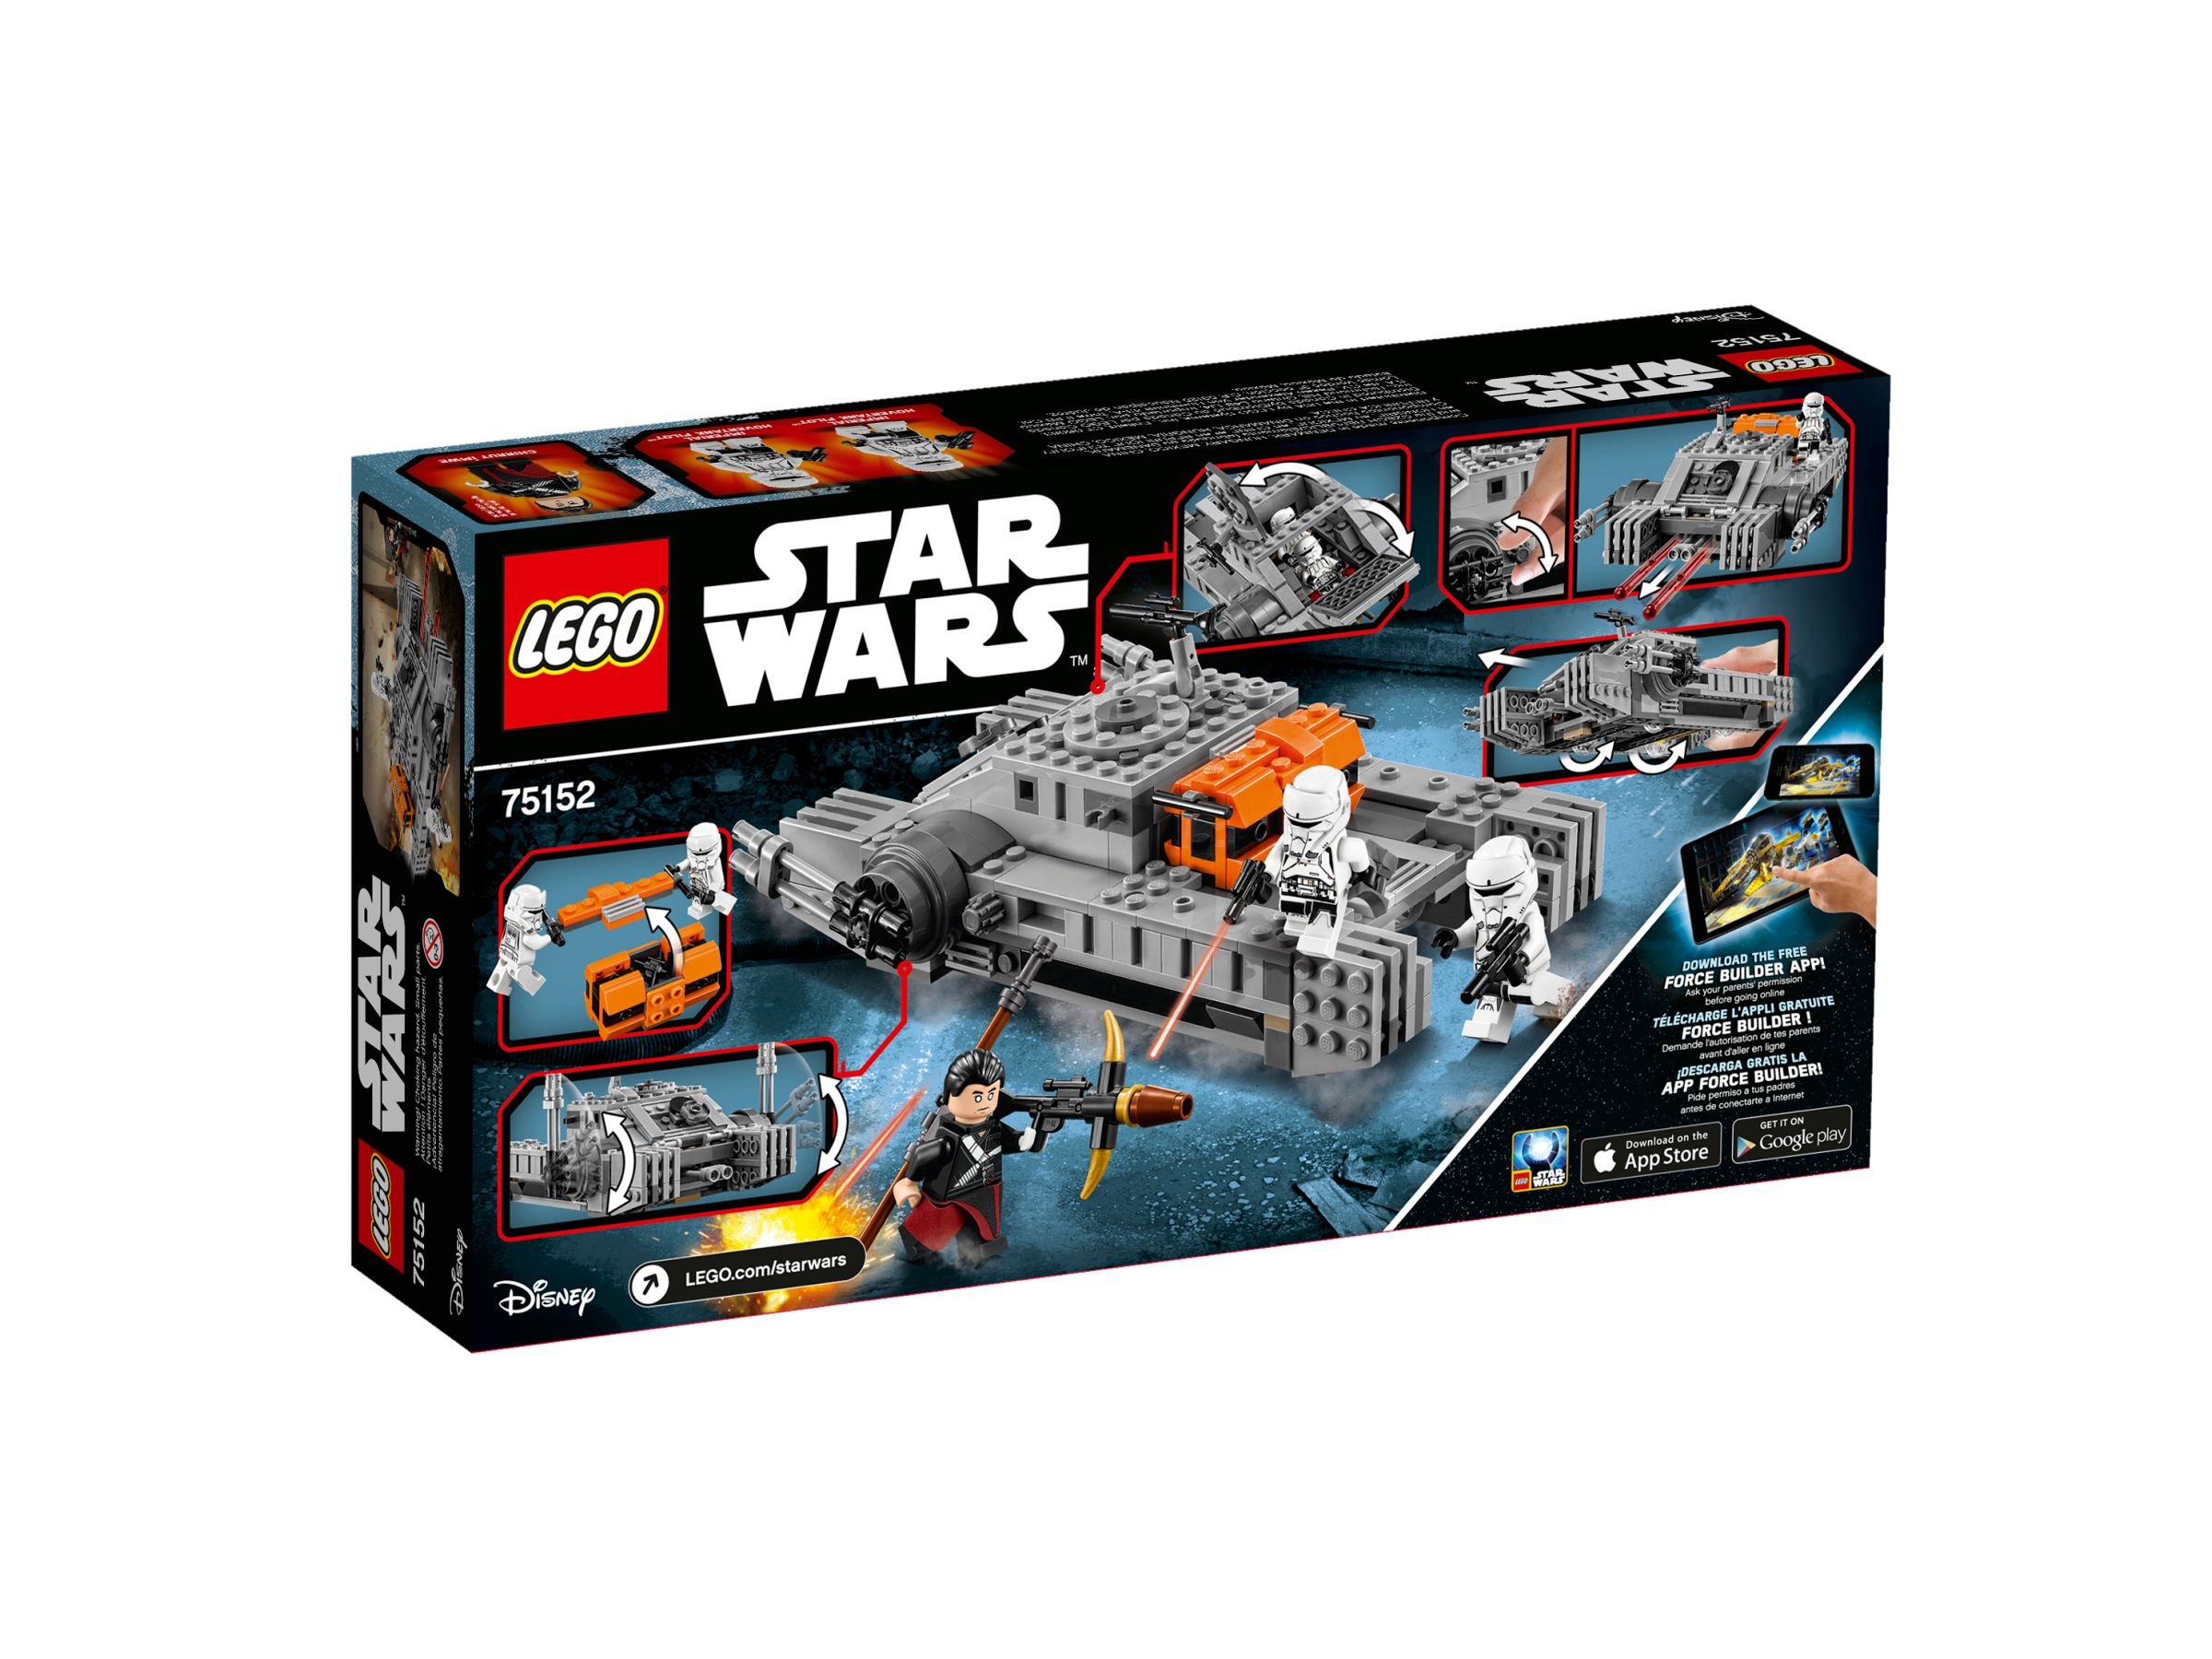 LEGO Star Wars 75152 Imperial Assault Hovertank™ LEGO_75152_alt1.jpg